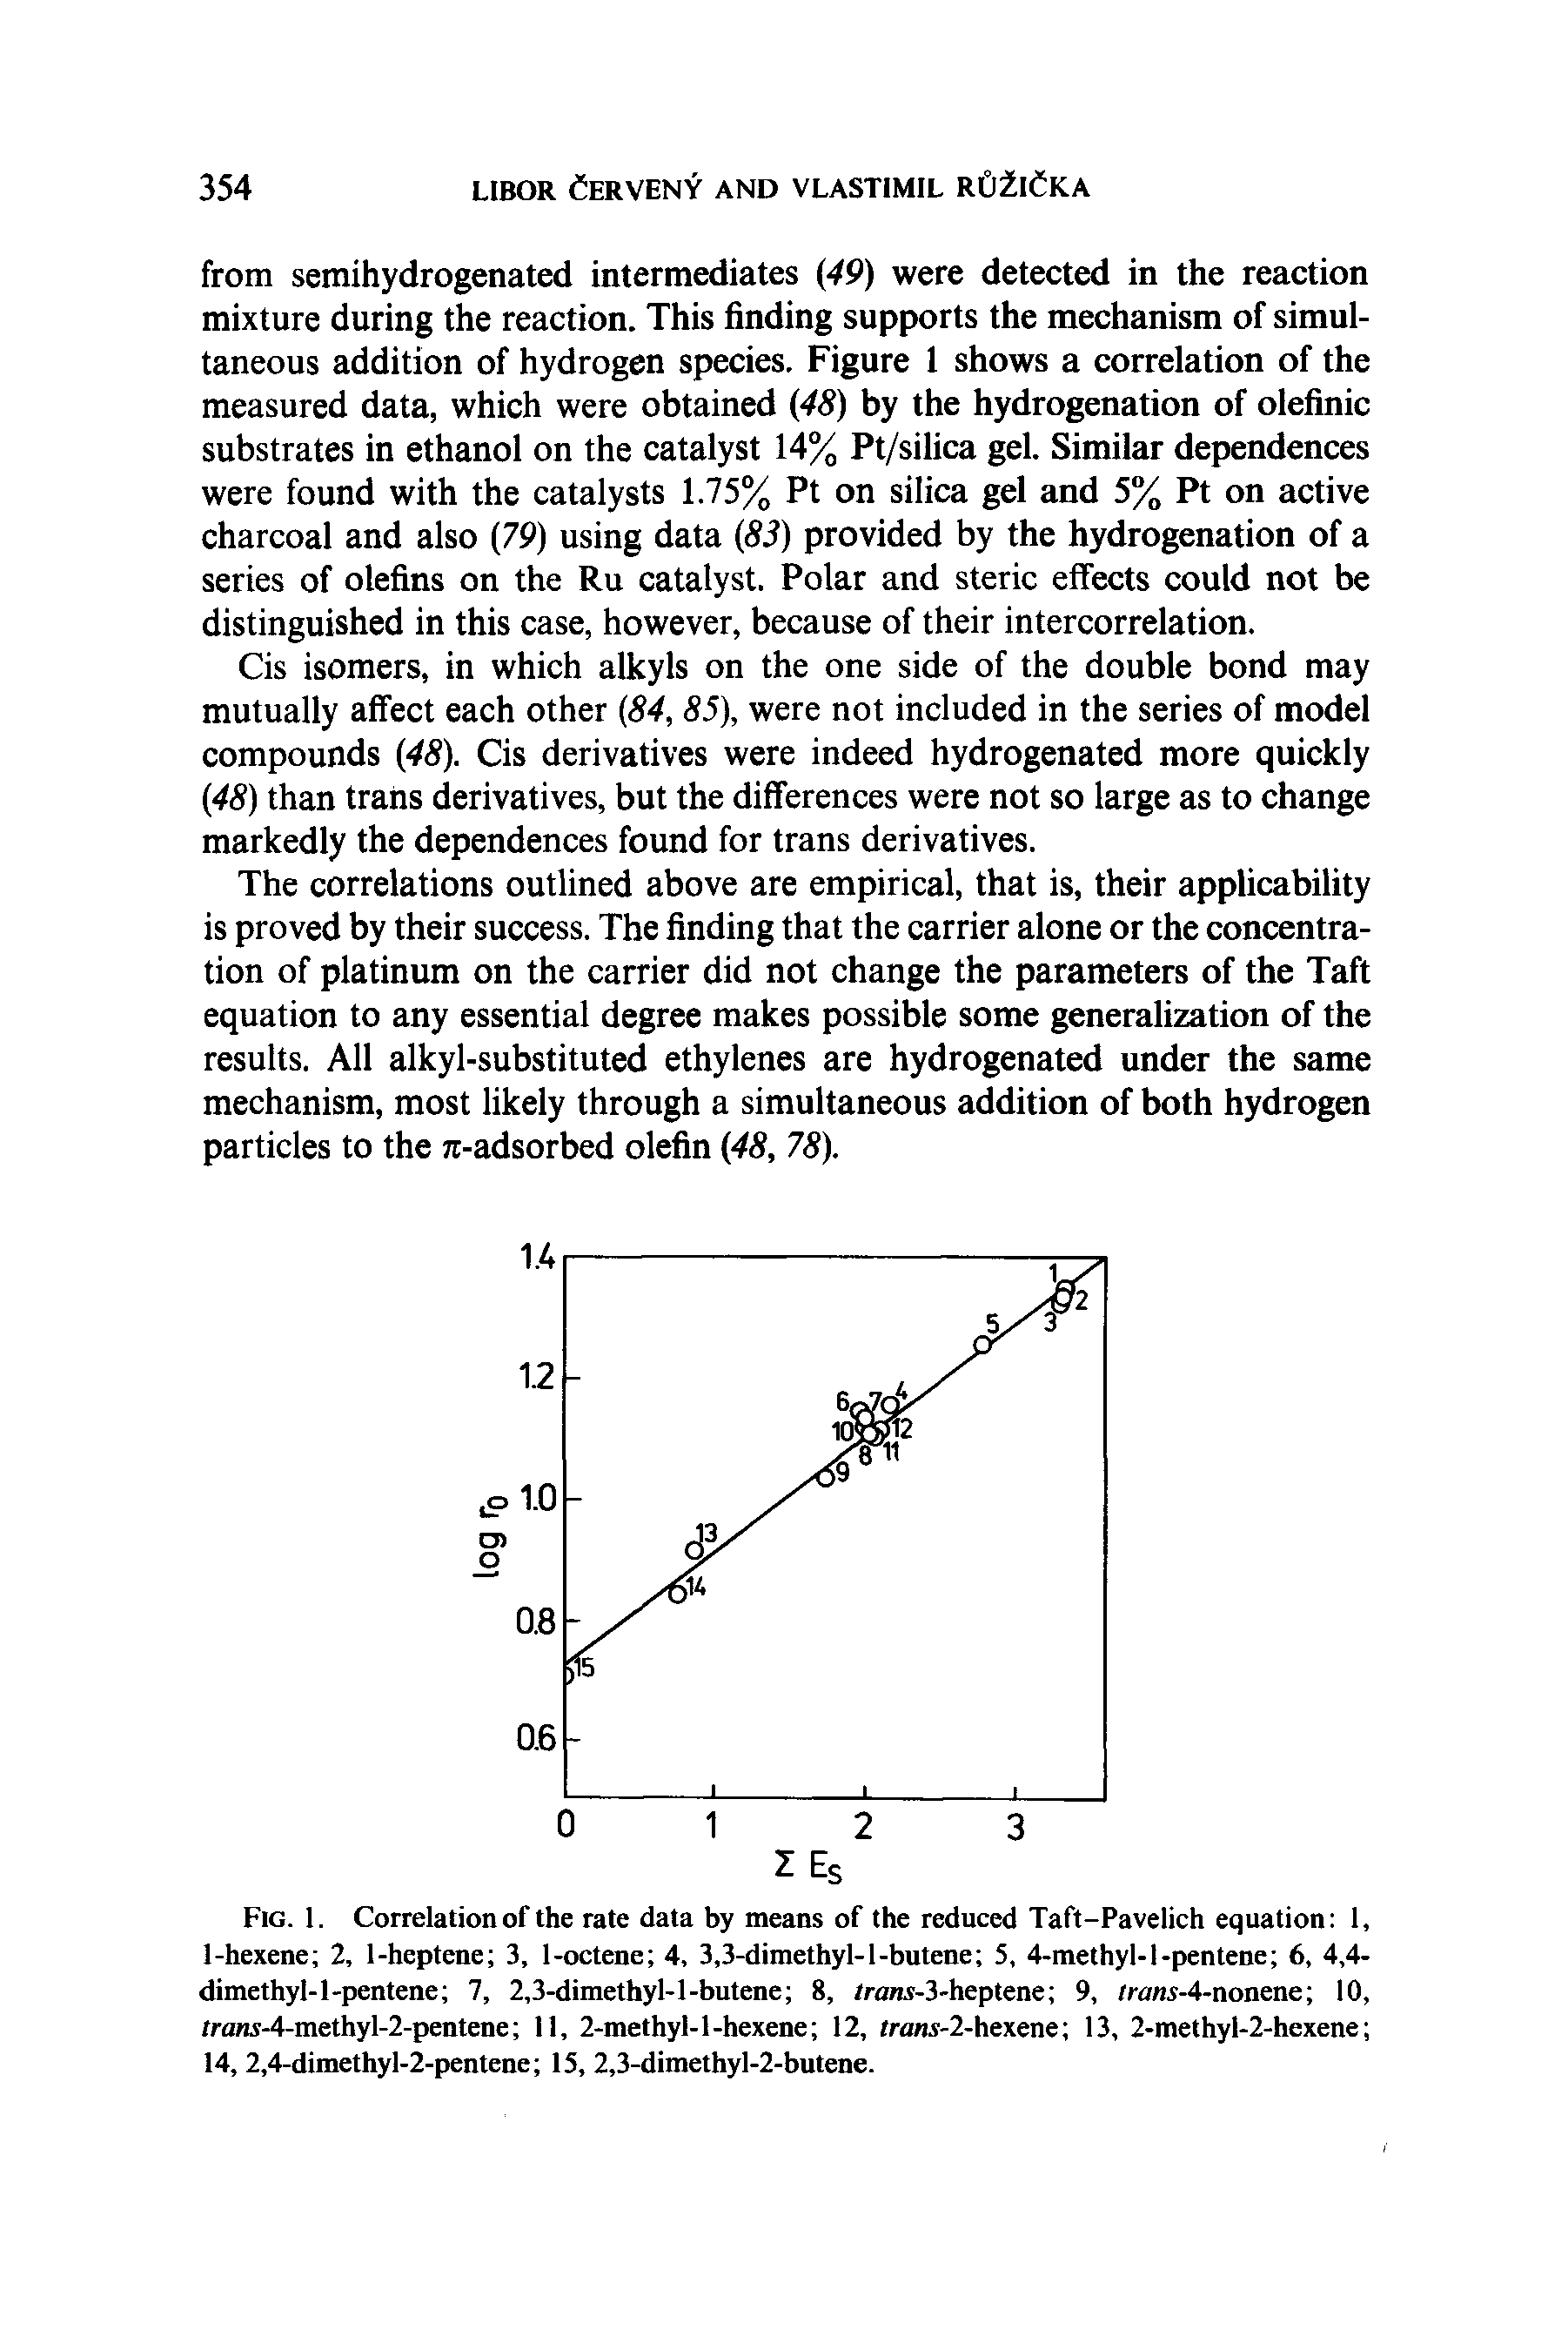 Fig. 1. Correlation of the rate data by means of the reduced Taft-Pavelich equation 1, 1-hexene 2, l-hcptene 3, 1-octene 4, 3,3-dimethyl-l-butene 5, 4-methyl-1-pentene 6, 4,4-dimethyl-1-pentene 7, 2,3-dimethyl-1-butene 8, tran.v-3-heptene 9, zrani -4-nonene 10, (rani-4-methyl-2-pentene 11, 2-methyl-1-hexene 12, trflni-2-hexene 13, 2-methyl-2-hexene 14, 2,4-dimethyl-2-pentene 15, 2,3-dimethyl-2-butene.